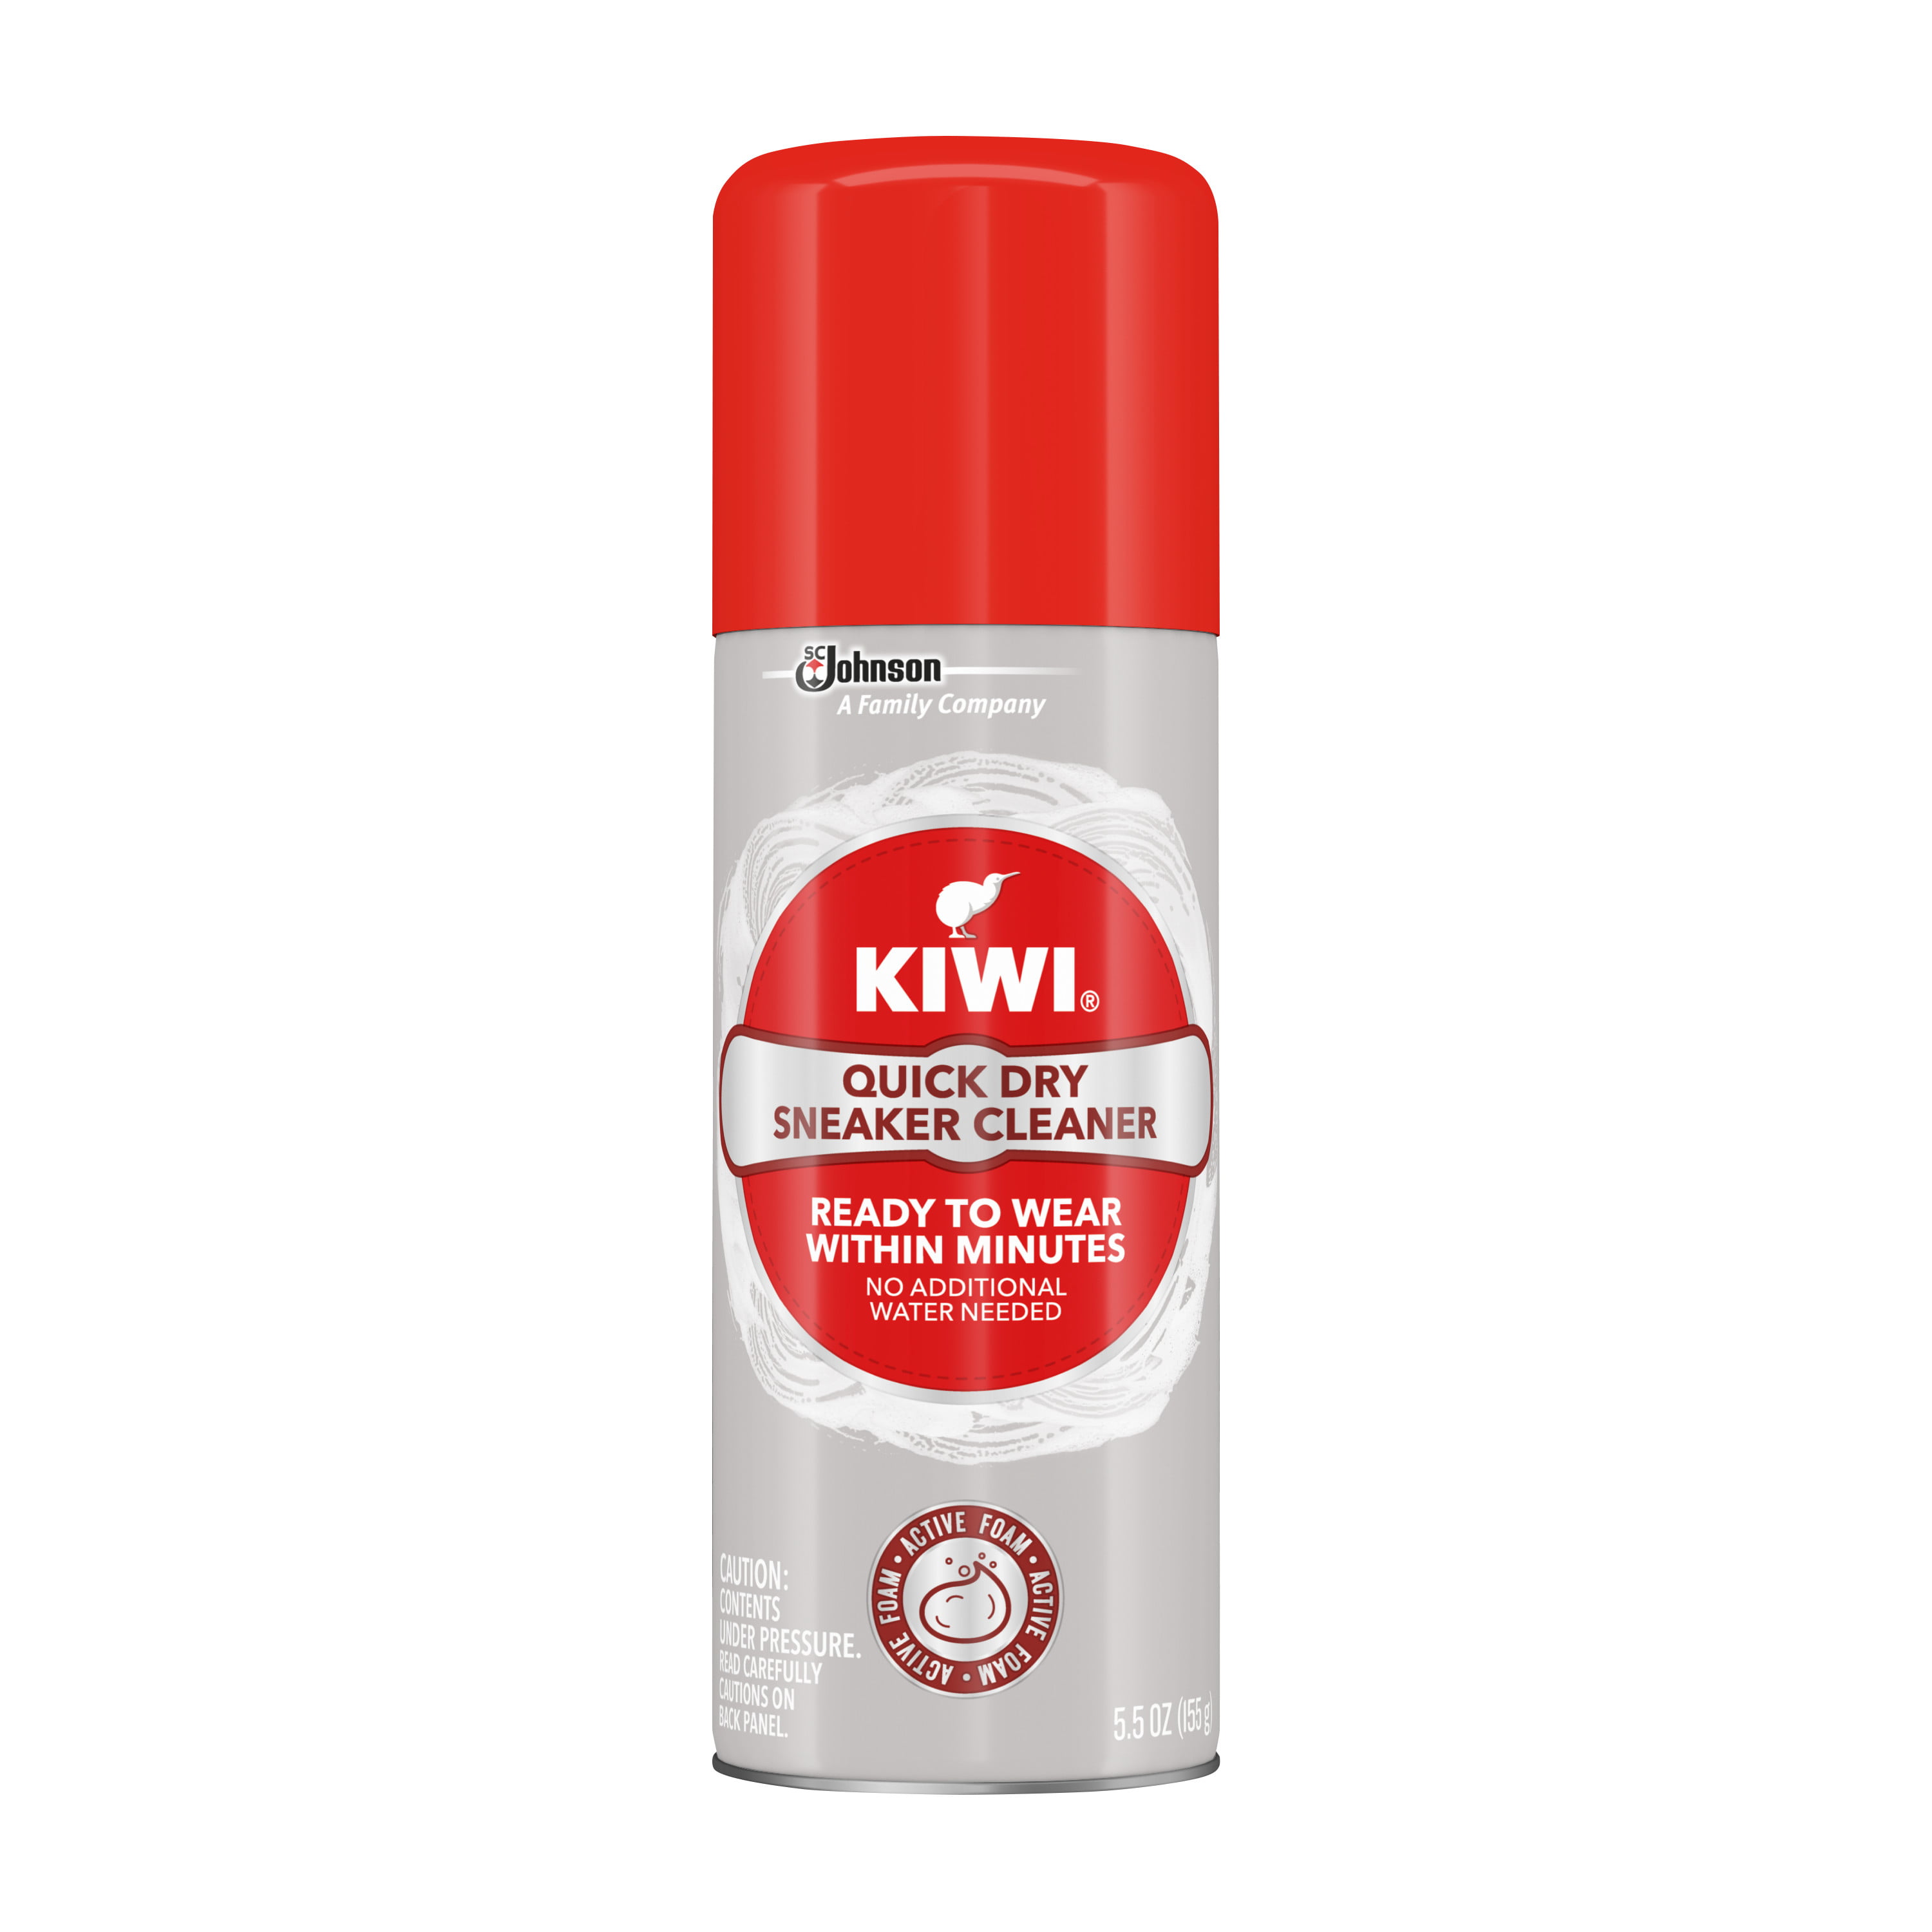 KIWI Quick Dry Sneaker Cleaner Spray, 5 